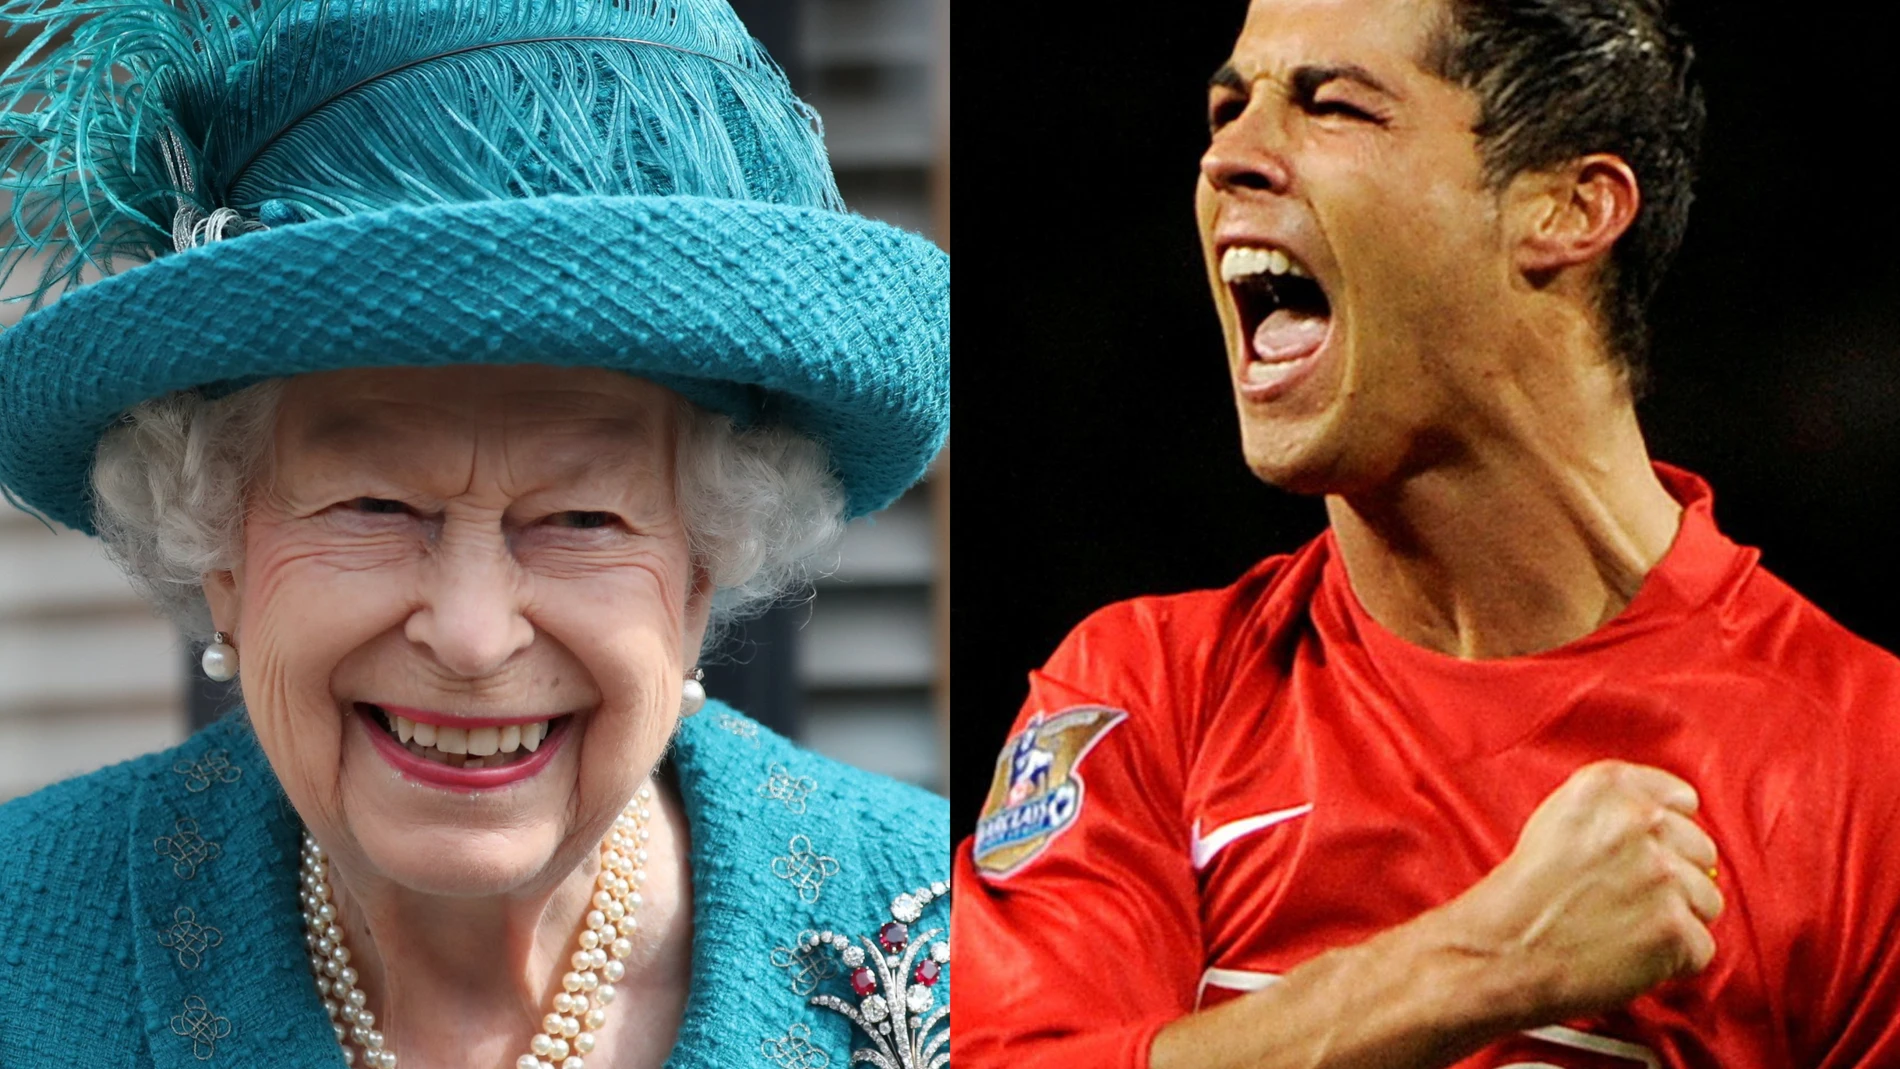 La reina Isabel II se declara fan de Cristiano Ronaldo